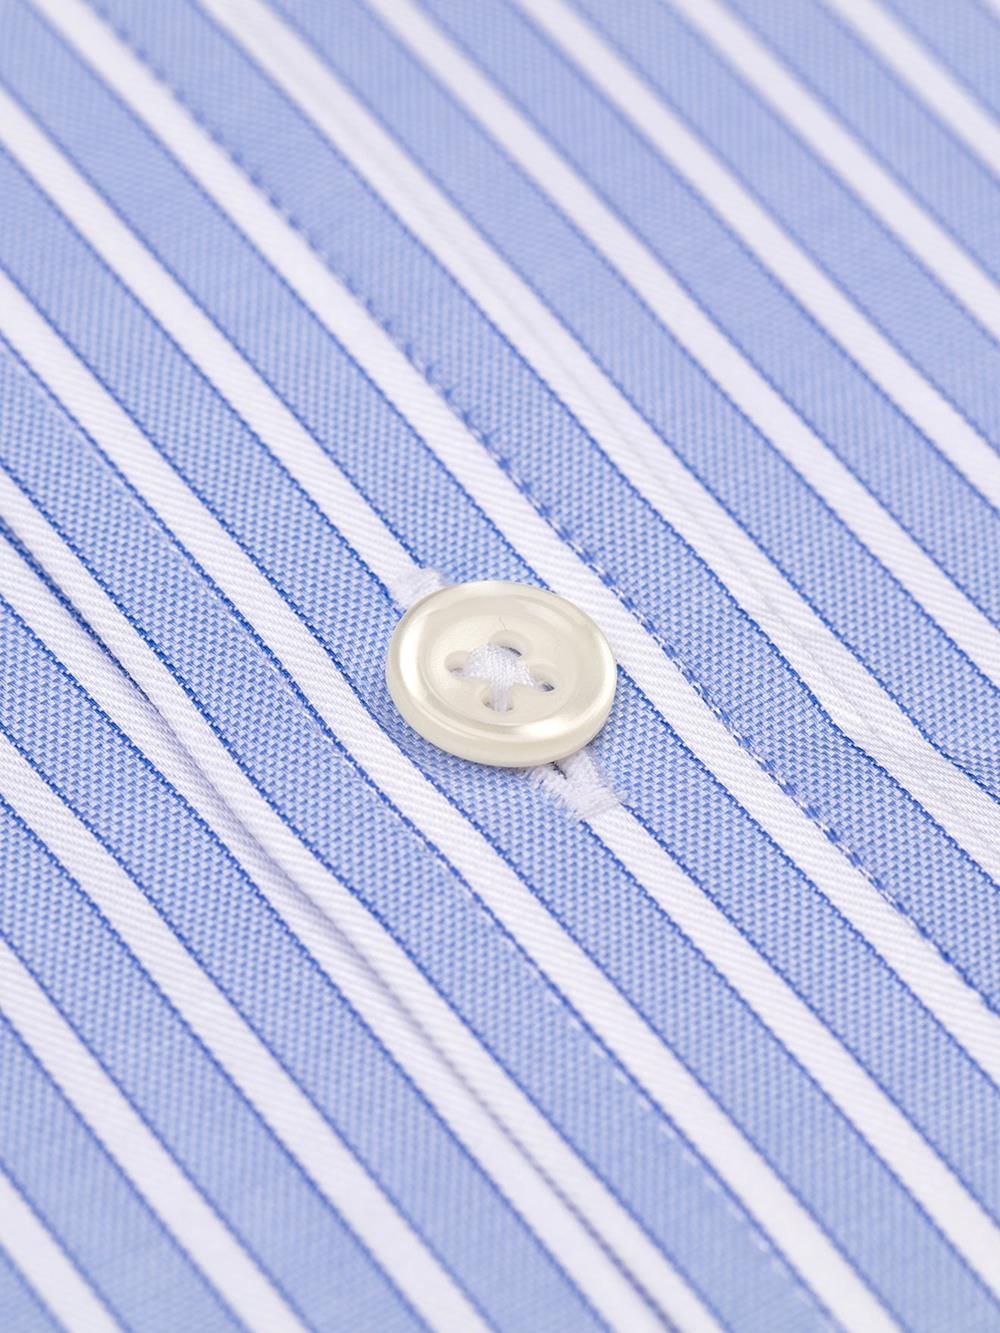 Colin sky blue striped slim fit shirt - Small collar